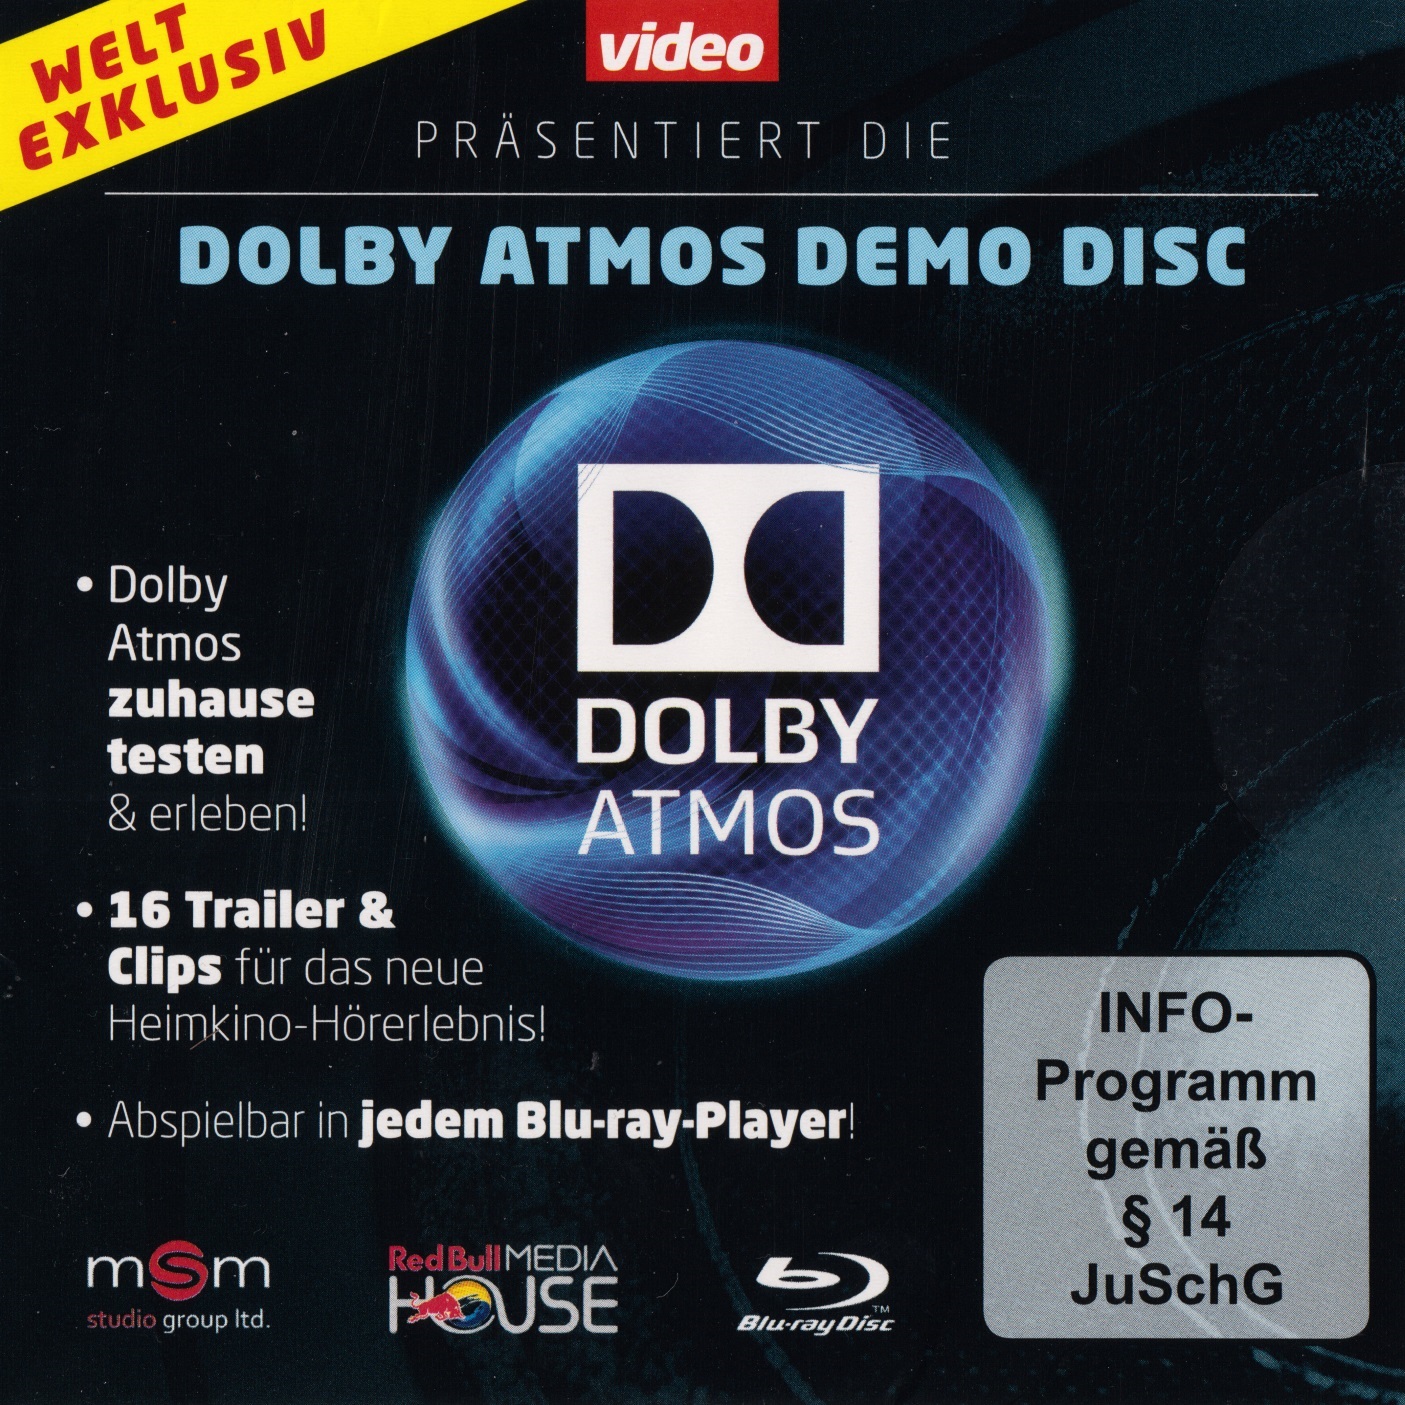 Dolby atmos blu-ray demo disc (aug 2018)